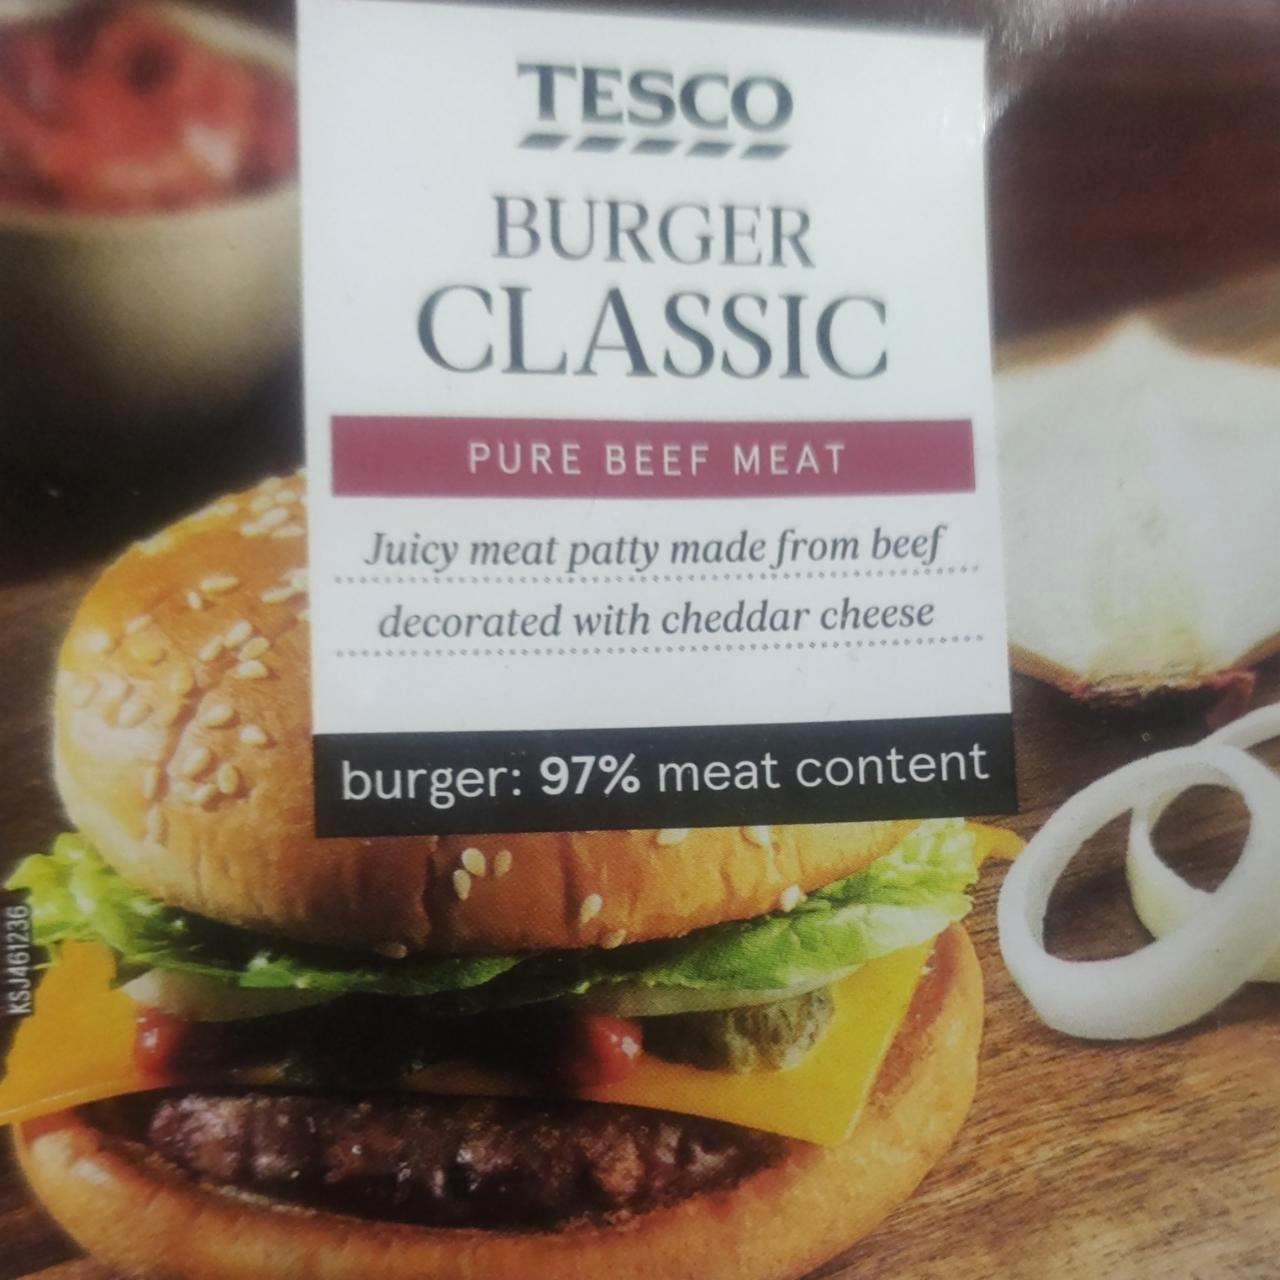 Képek - Burger Classic Tesco